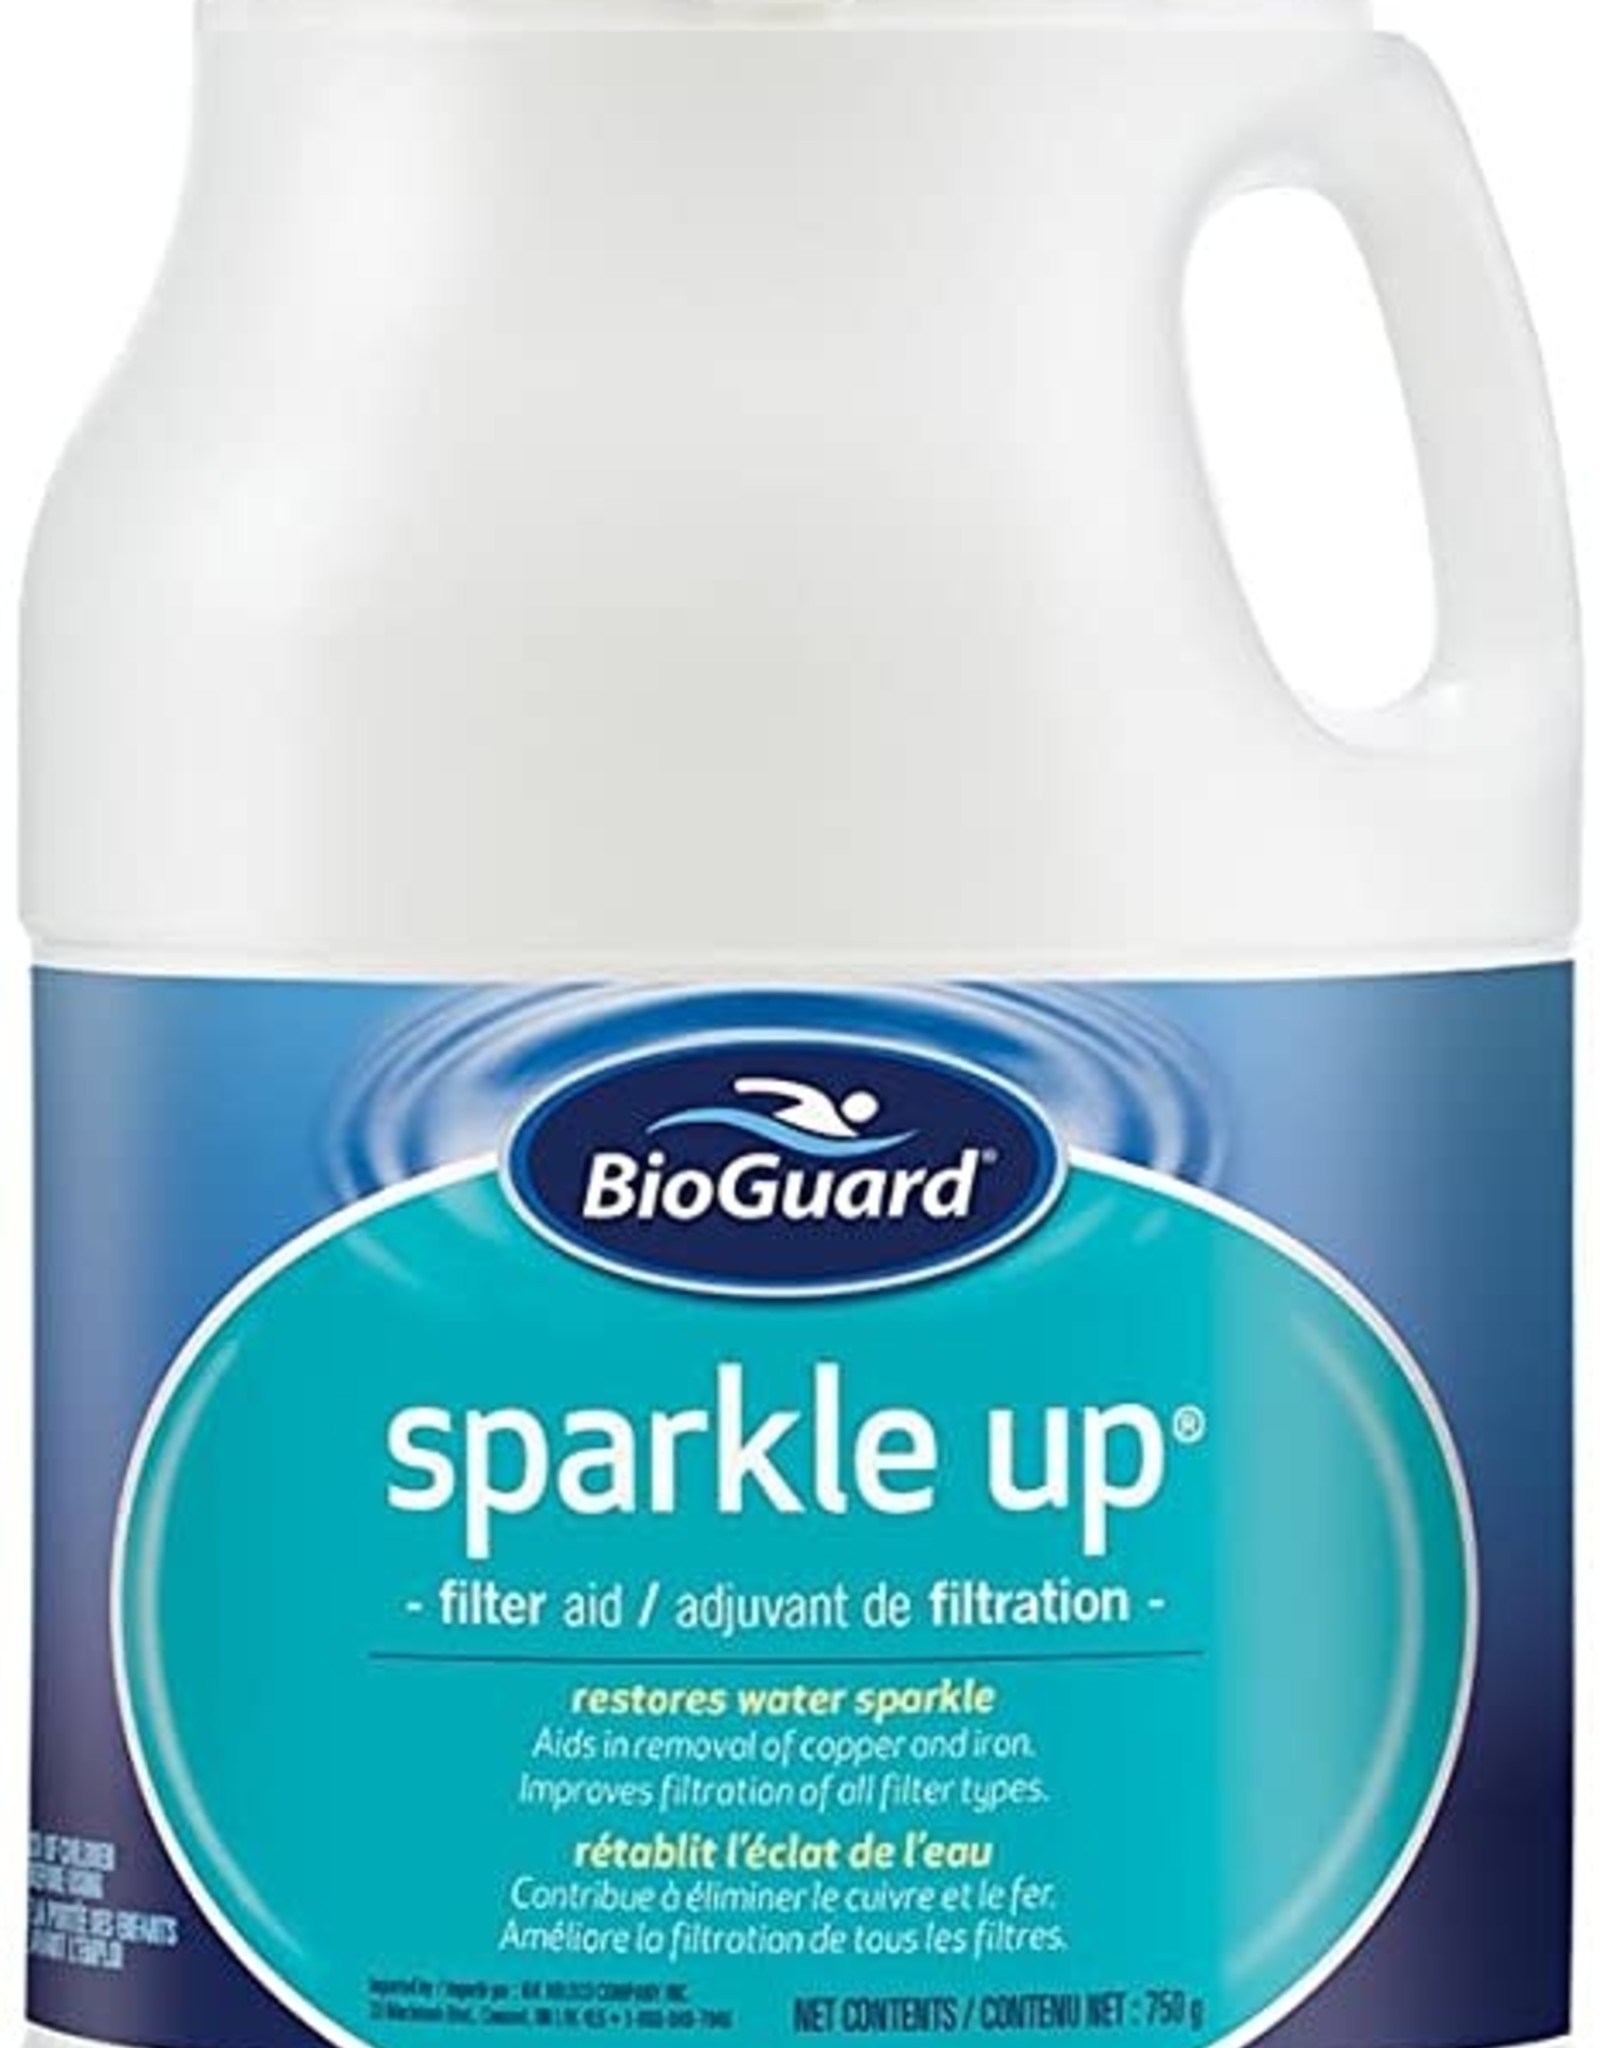 BIOGUARD Bioguard sparkle up 750g